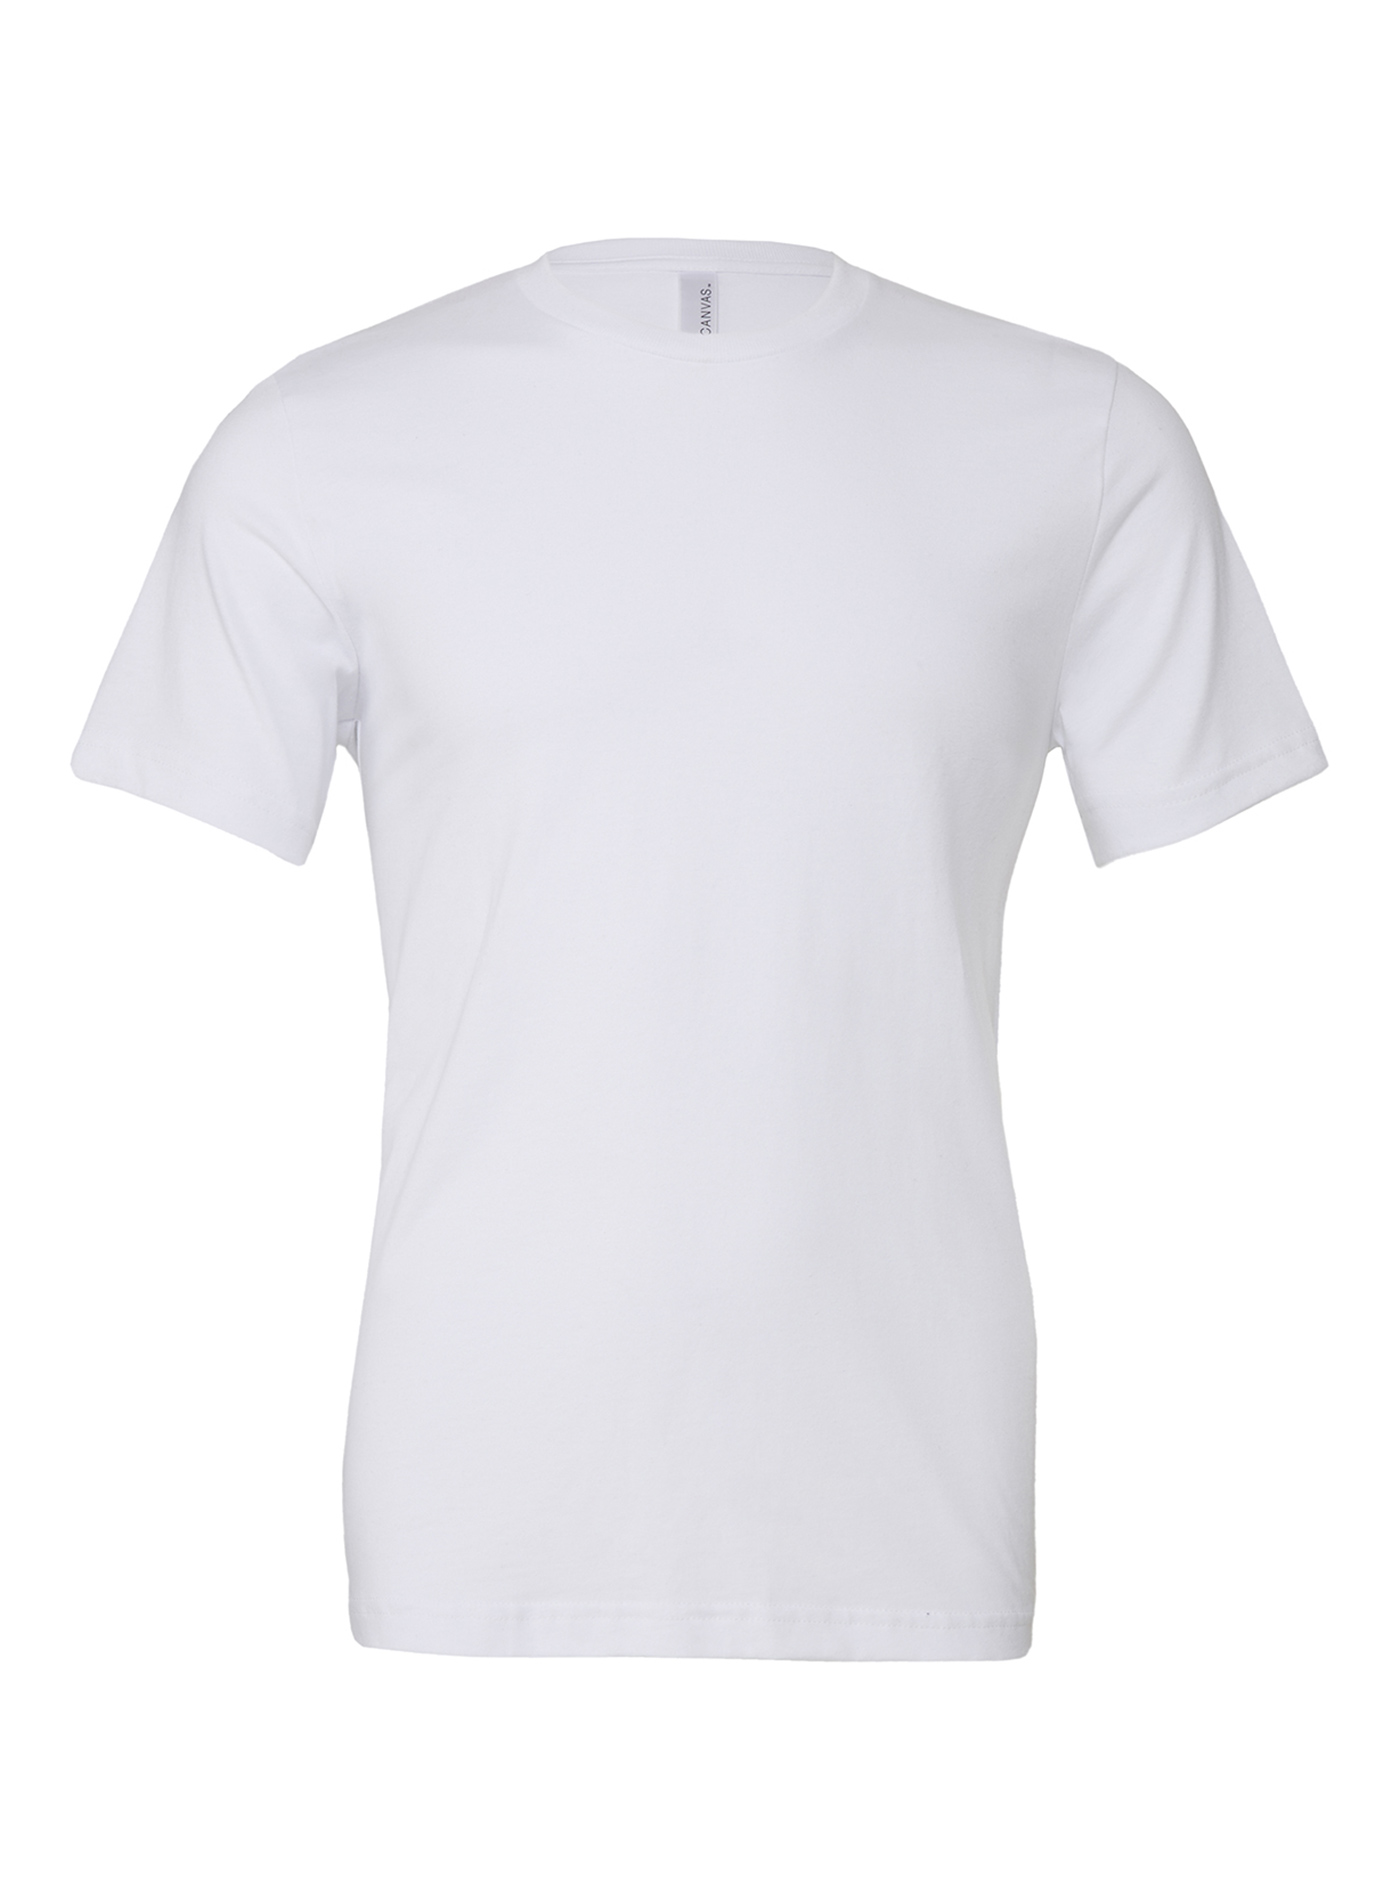 Unisex tričko Jersey - Bílá XXL